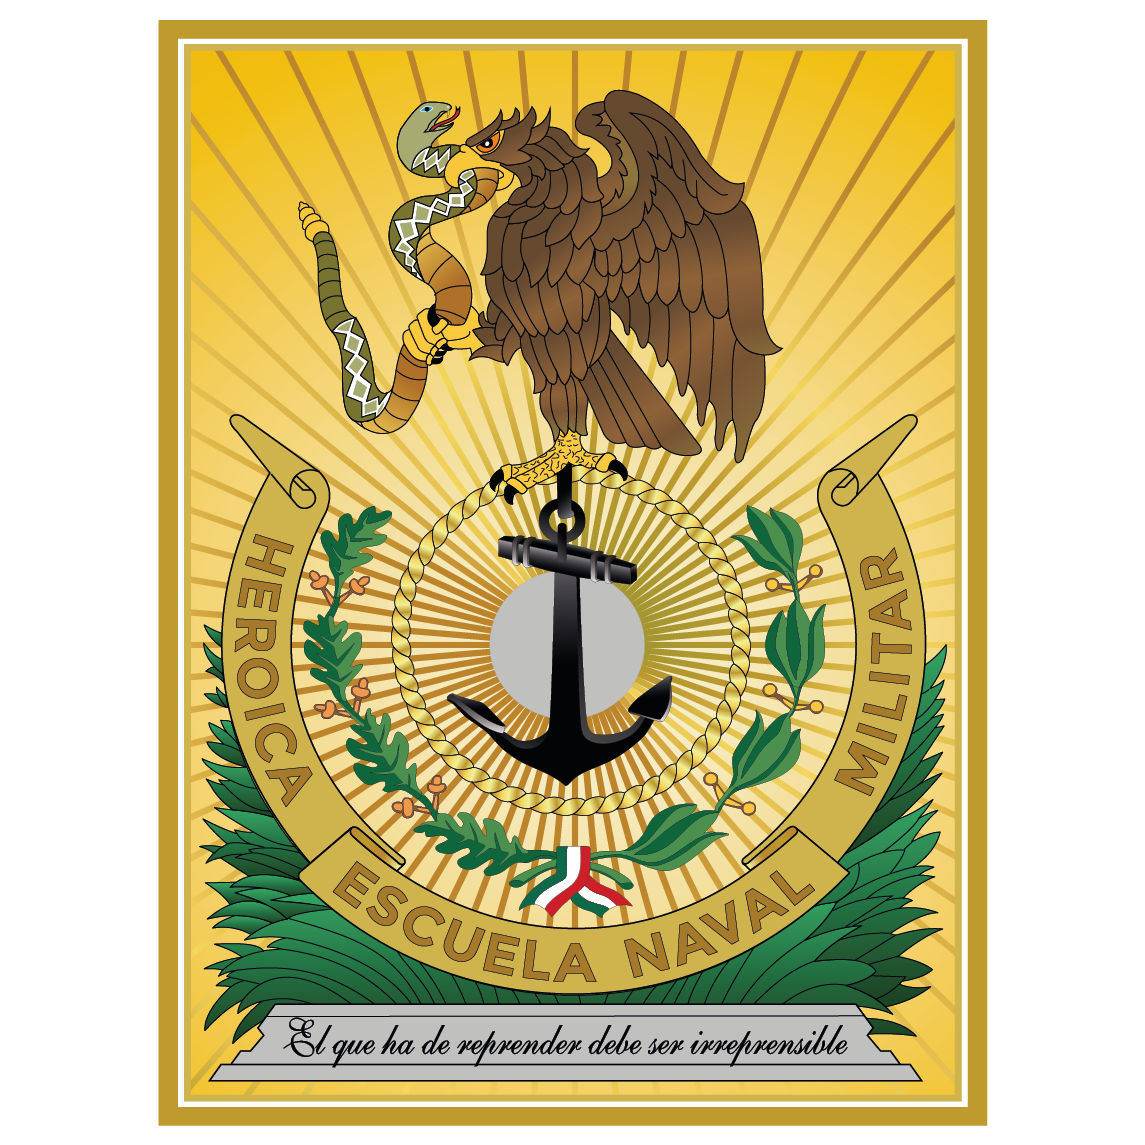 Heroic Naval Military School logo